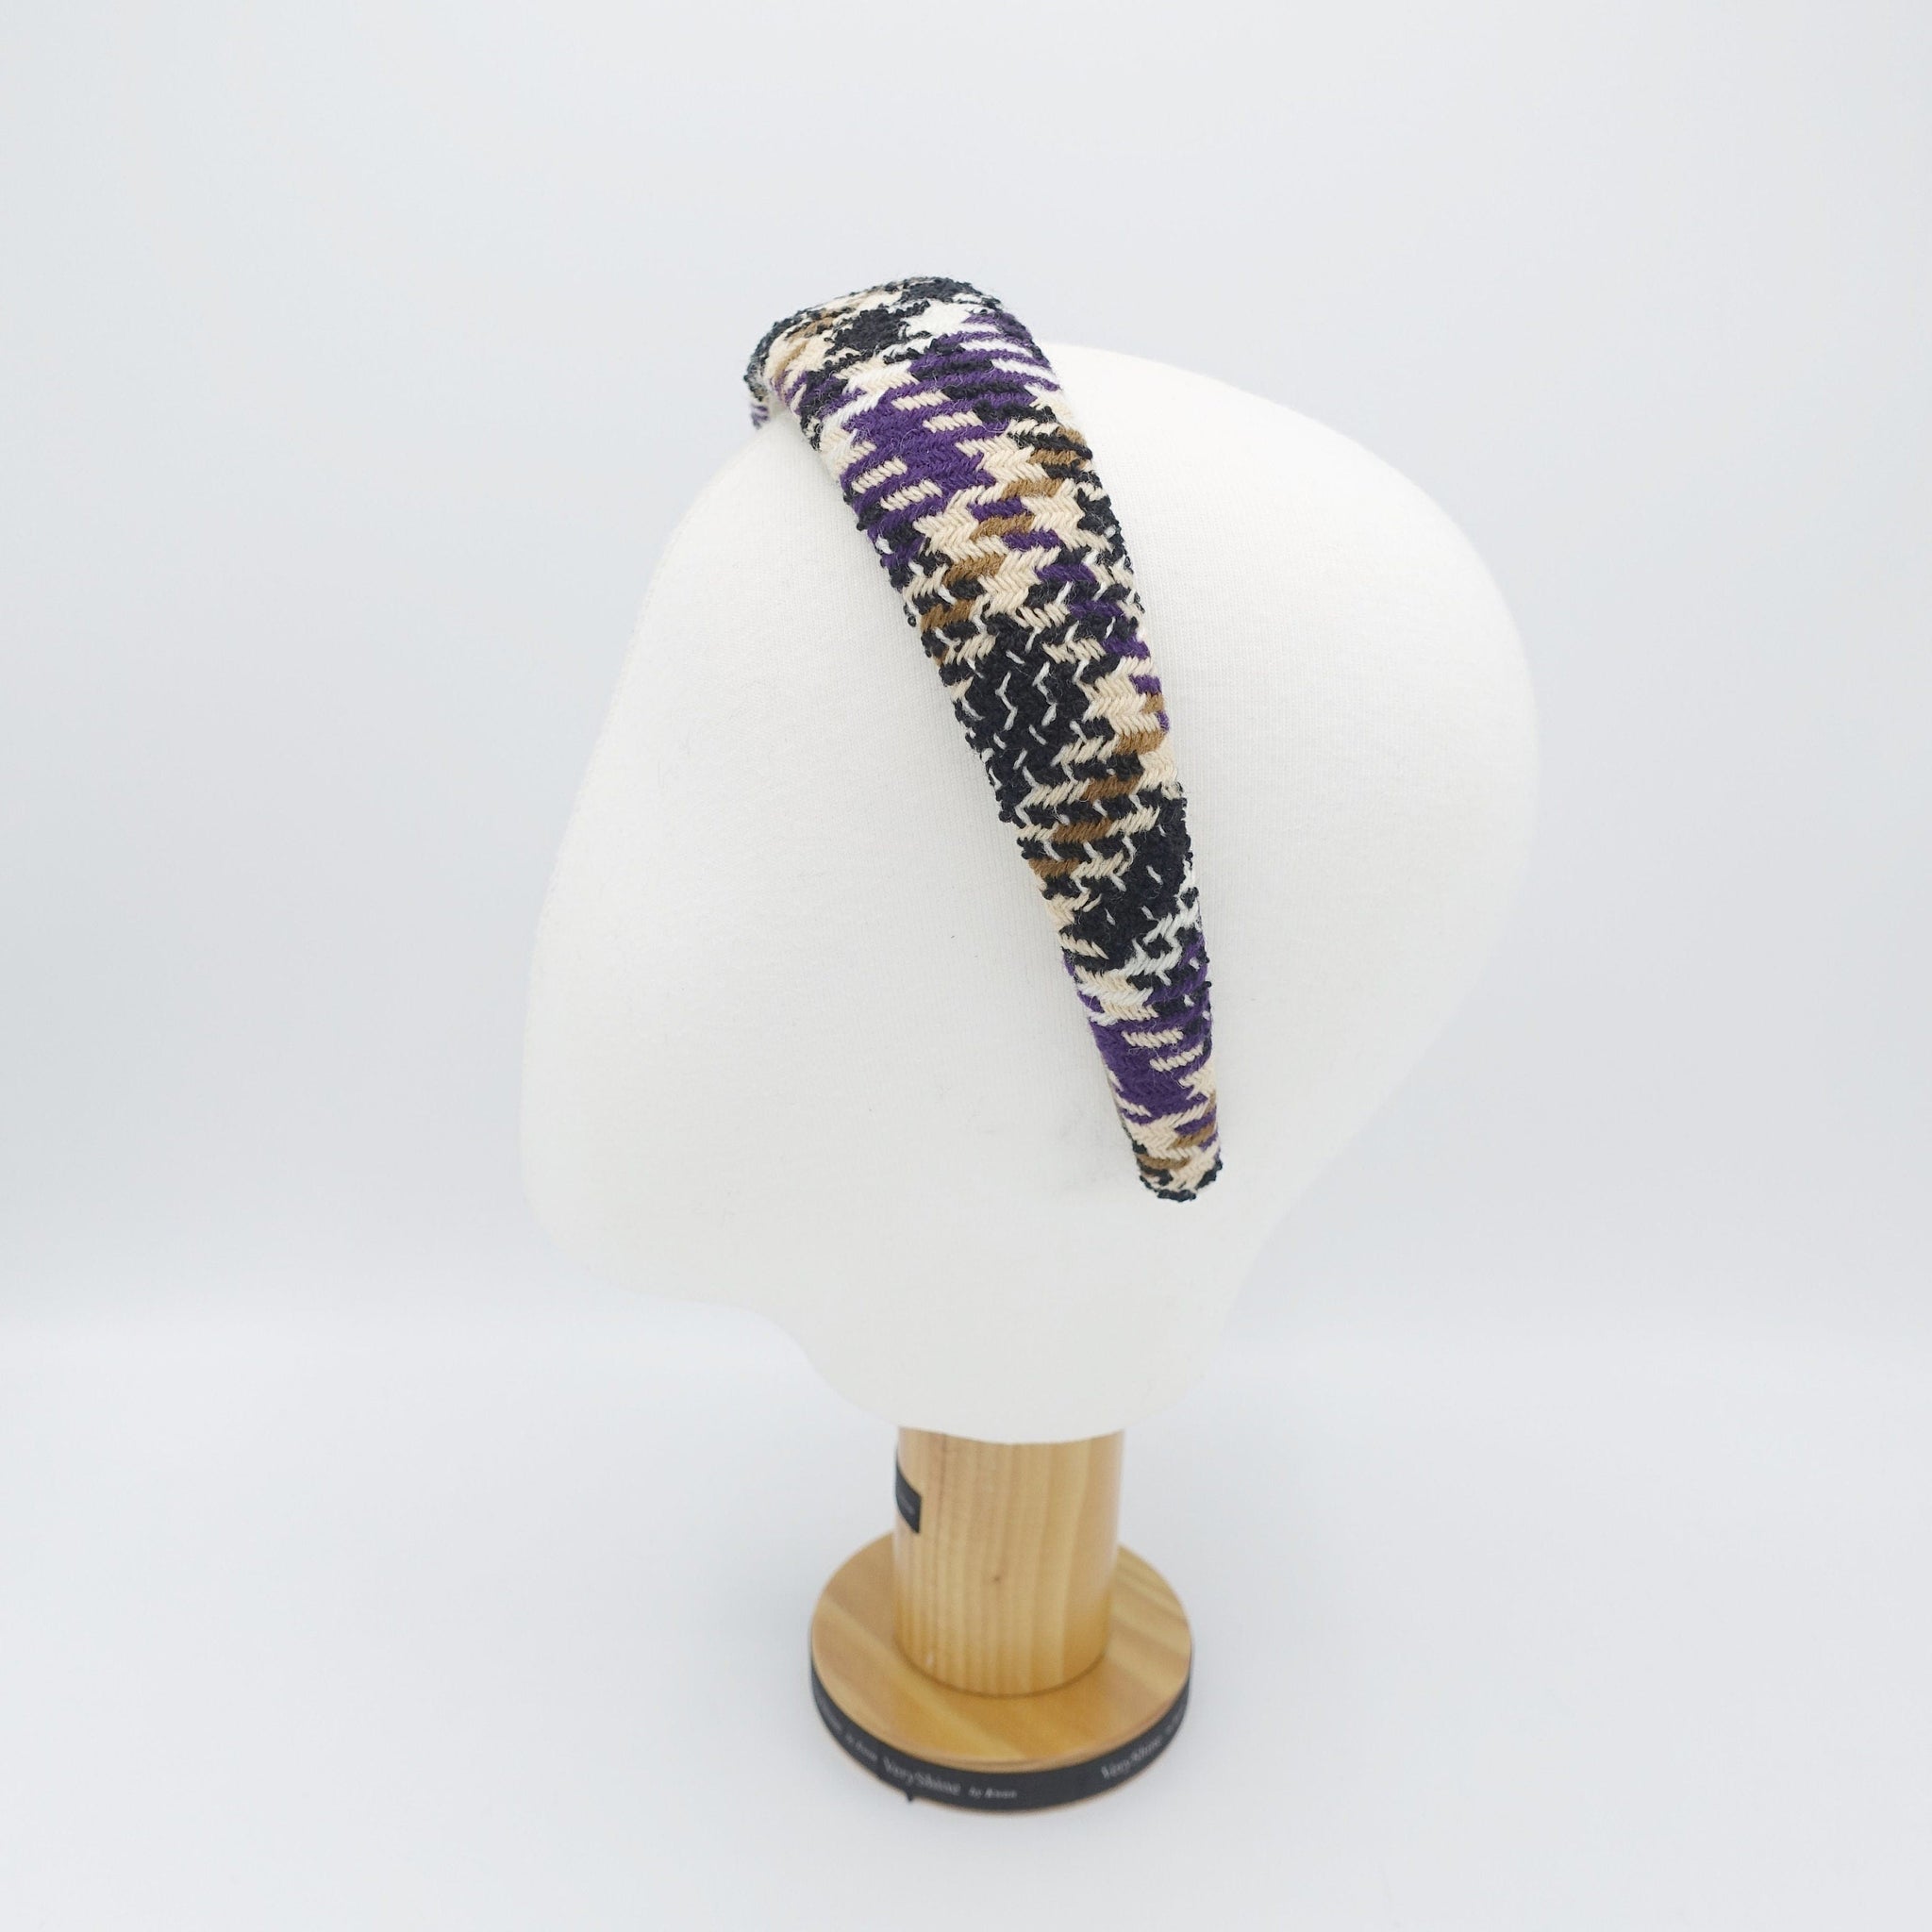 veryshine.com check houndstooth tweed headband padded hairband Fall Winter stylish casual hair accessory for women